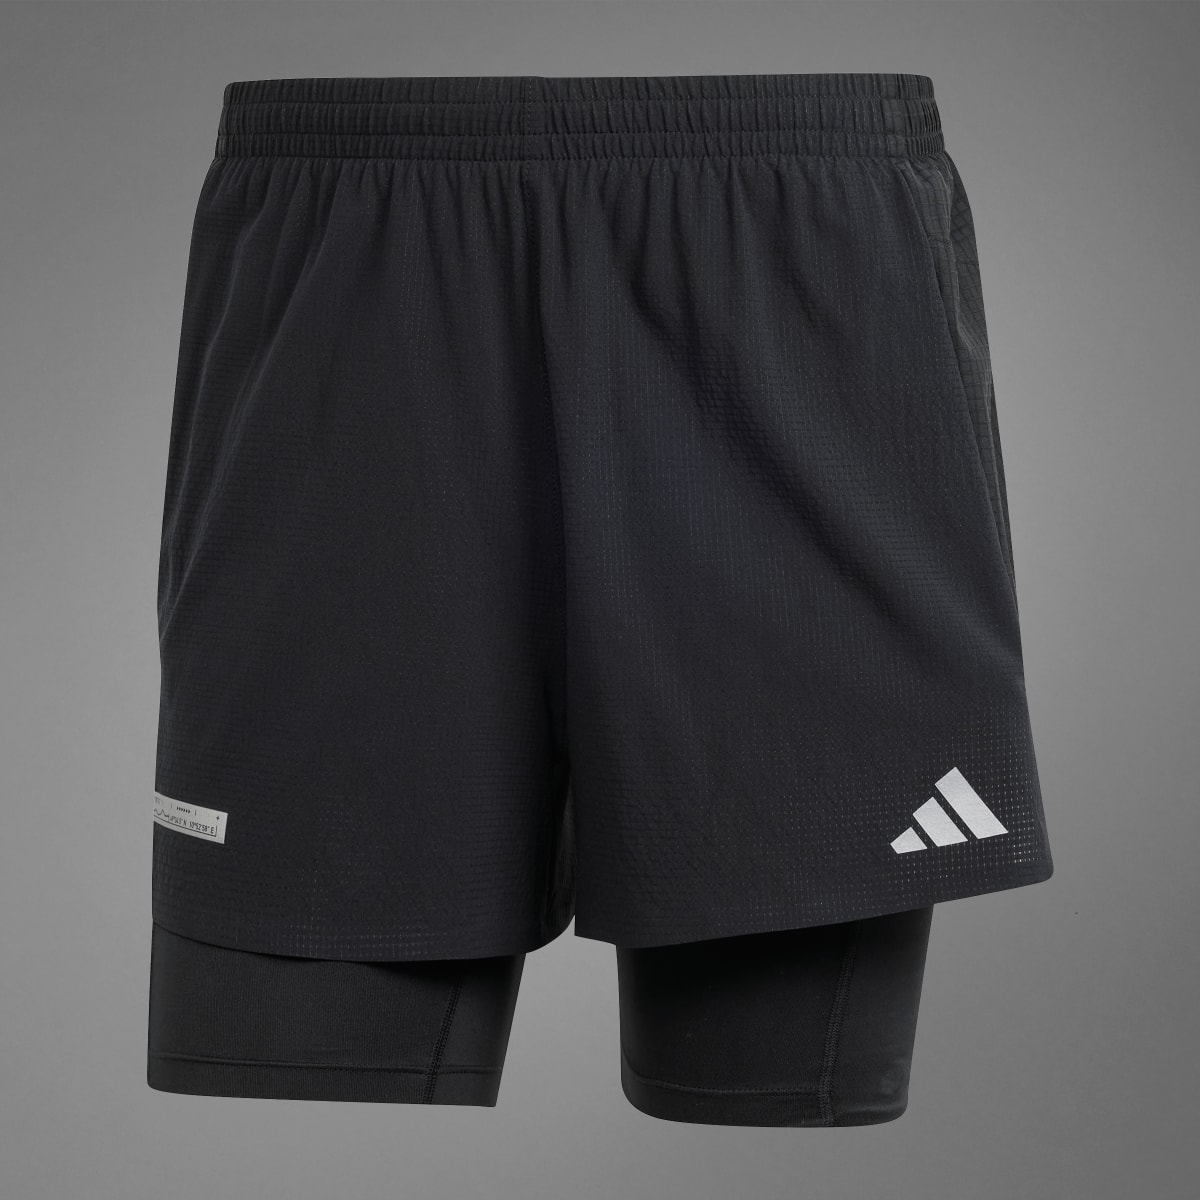 Adidas Ultimateadidas 2-in-1 Shorts. 9